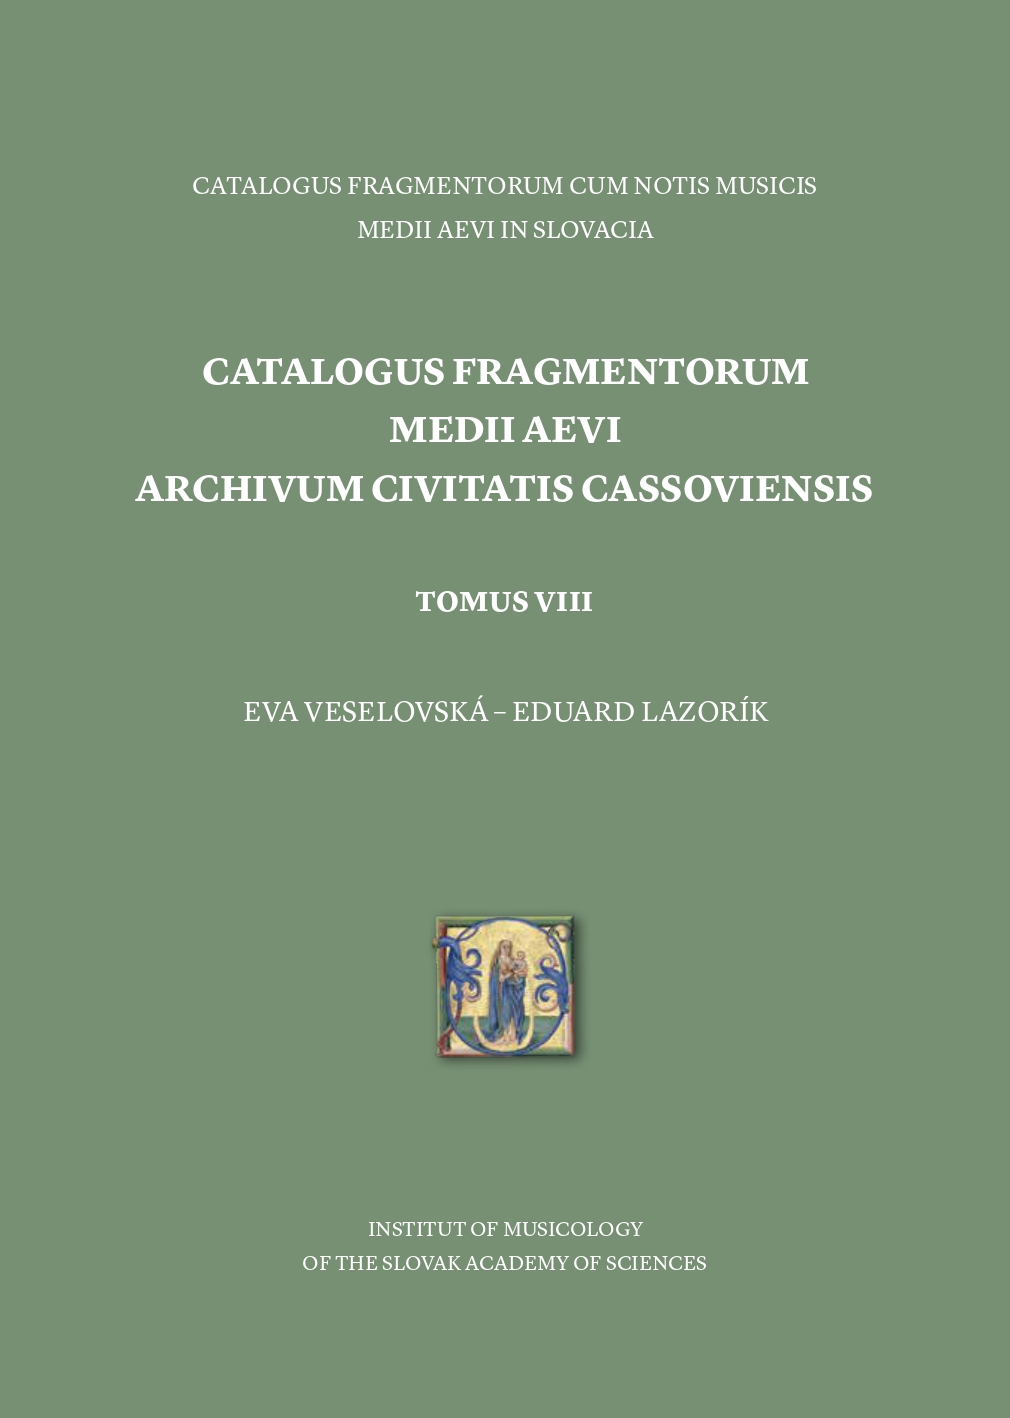 Catalogus fragmentorum medii aevi - Archivum Civitatis Cassoviensis